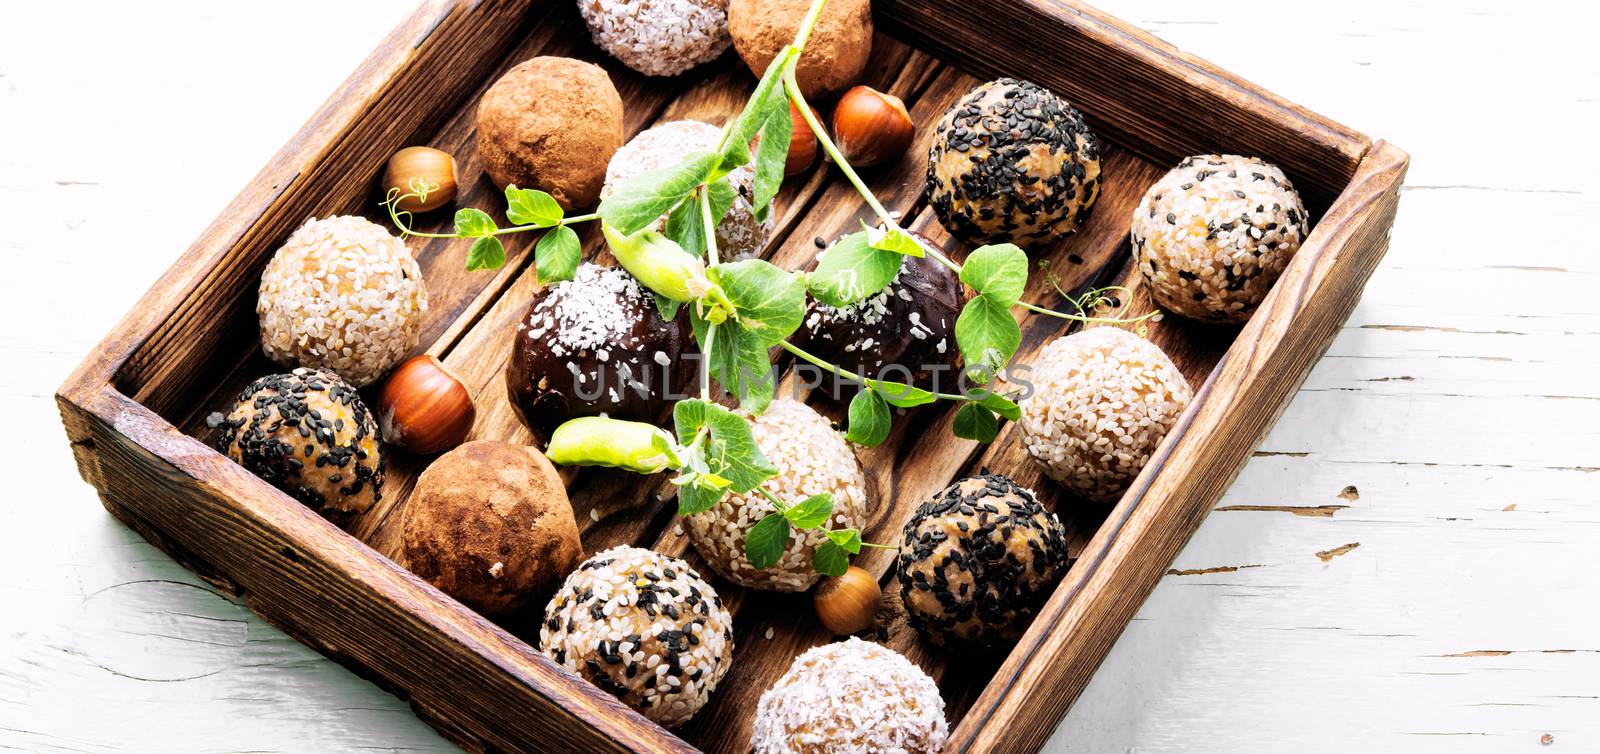 Vegan chocolate truffles by LMykola